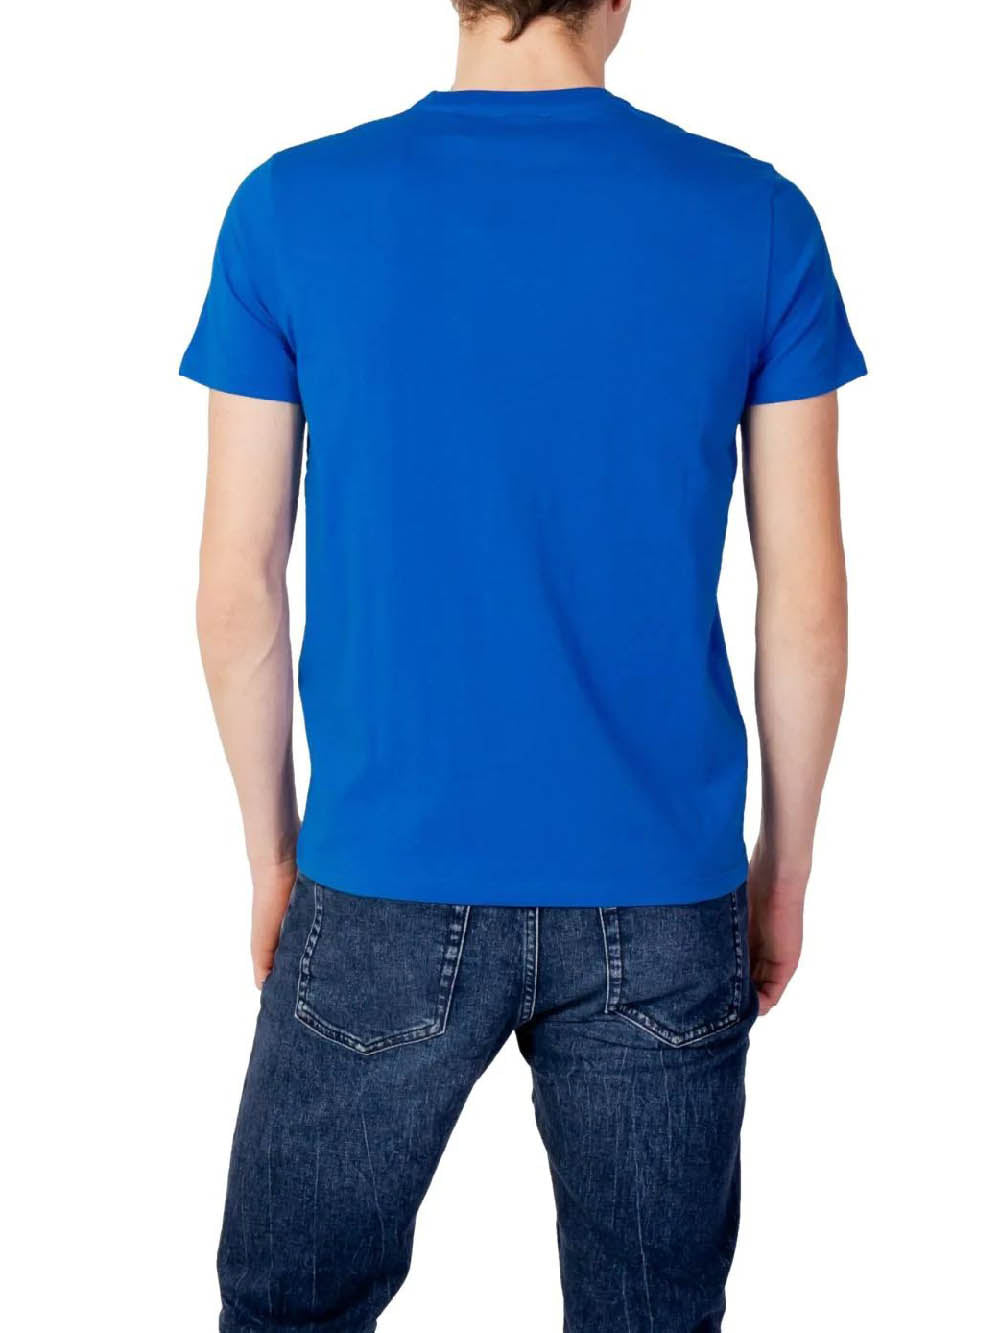 U.S. POLO ASSN. T-shirt Uomo Bluette